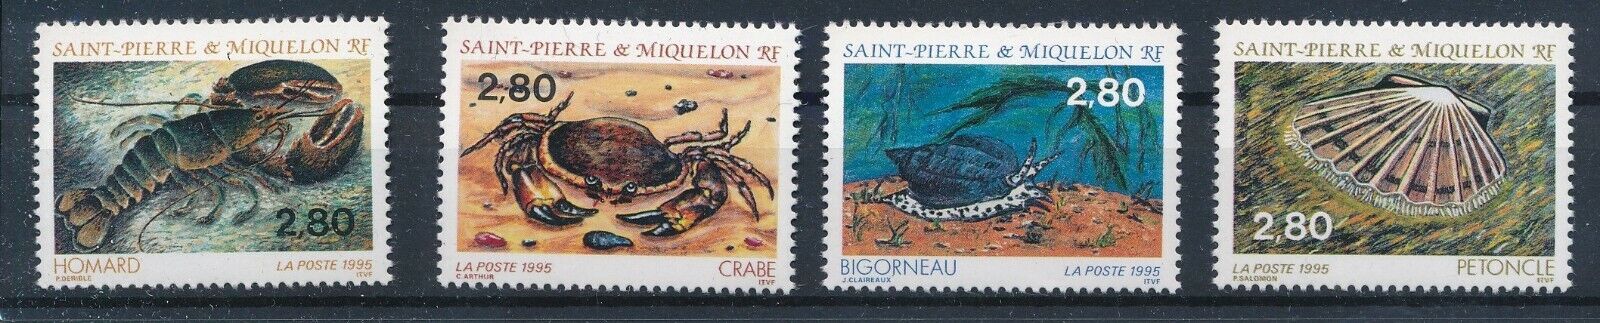 I3481 St favorite P Miquelon 1995 Marina Life good stamps set latest VF of MN